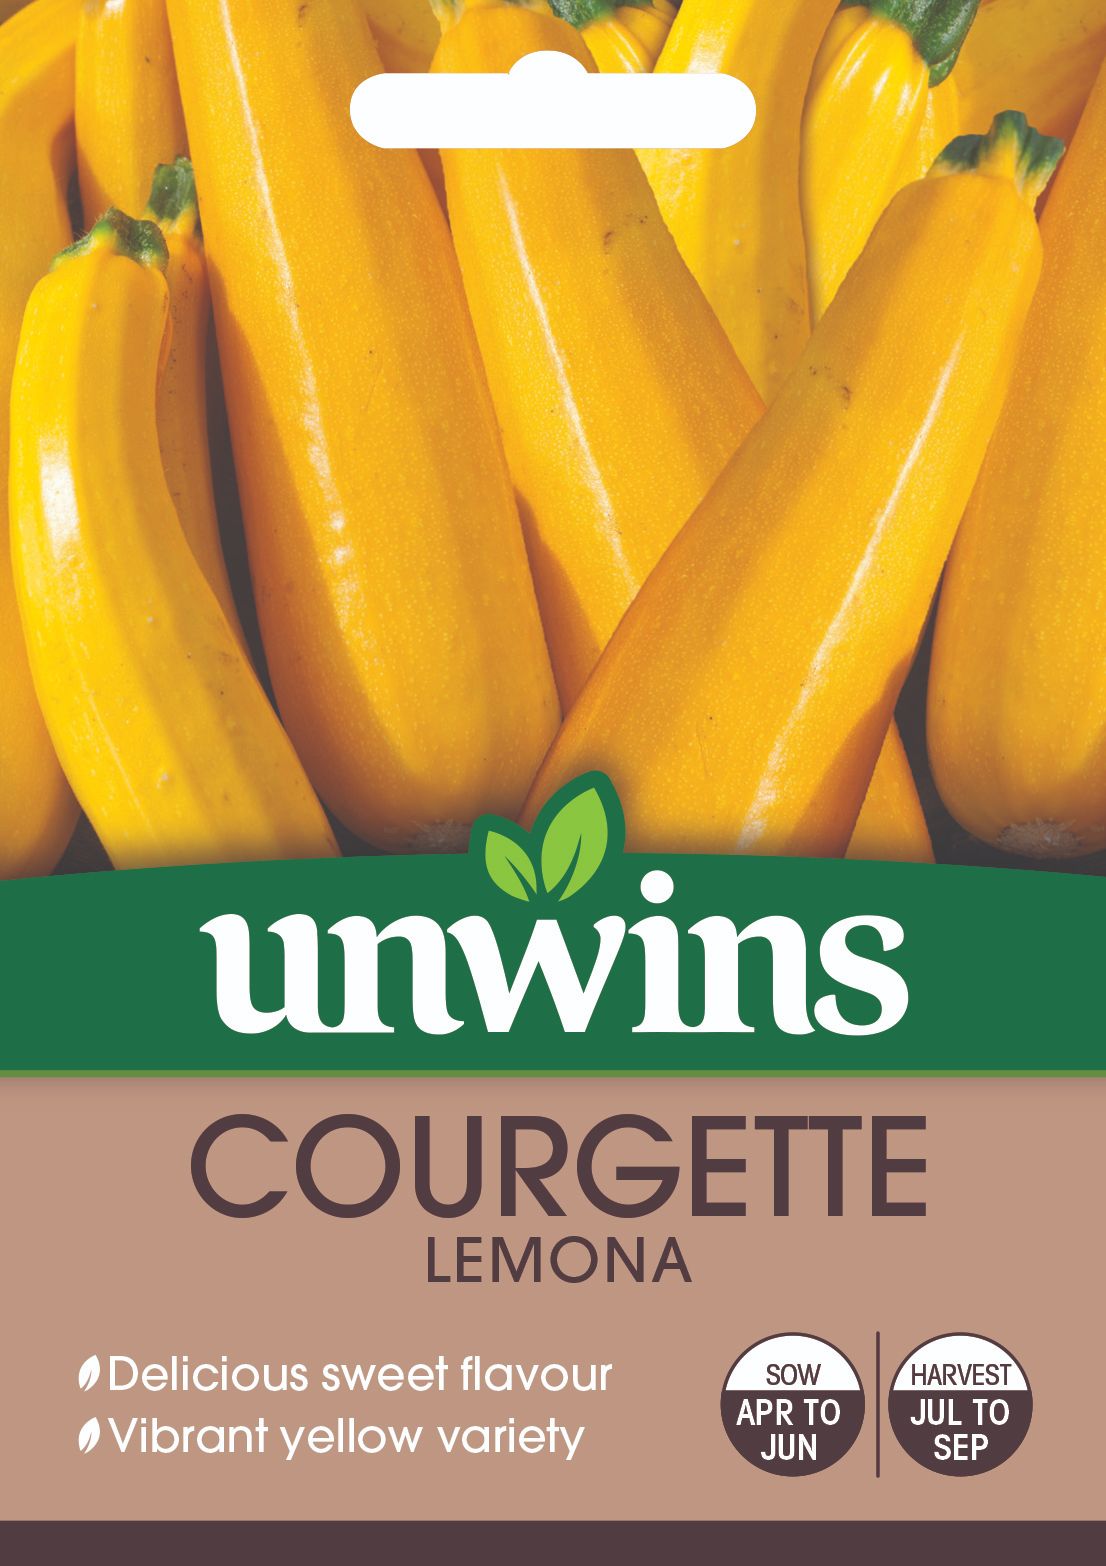 Courgette Lemona